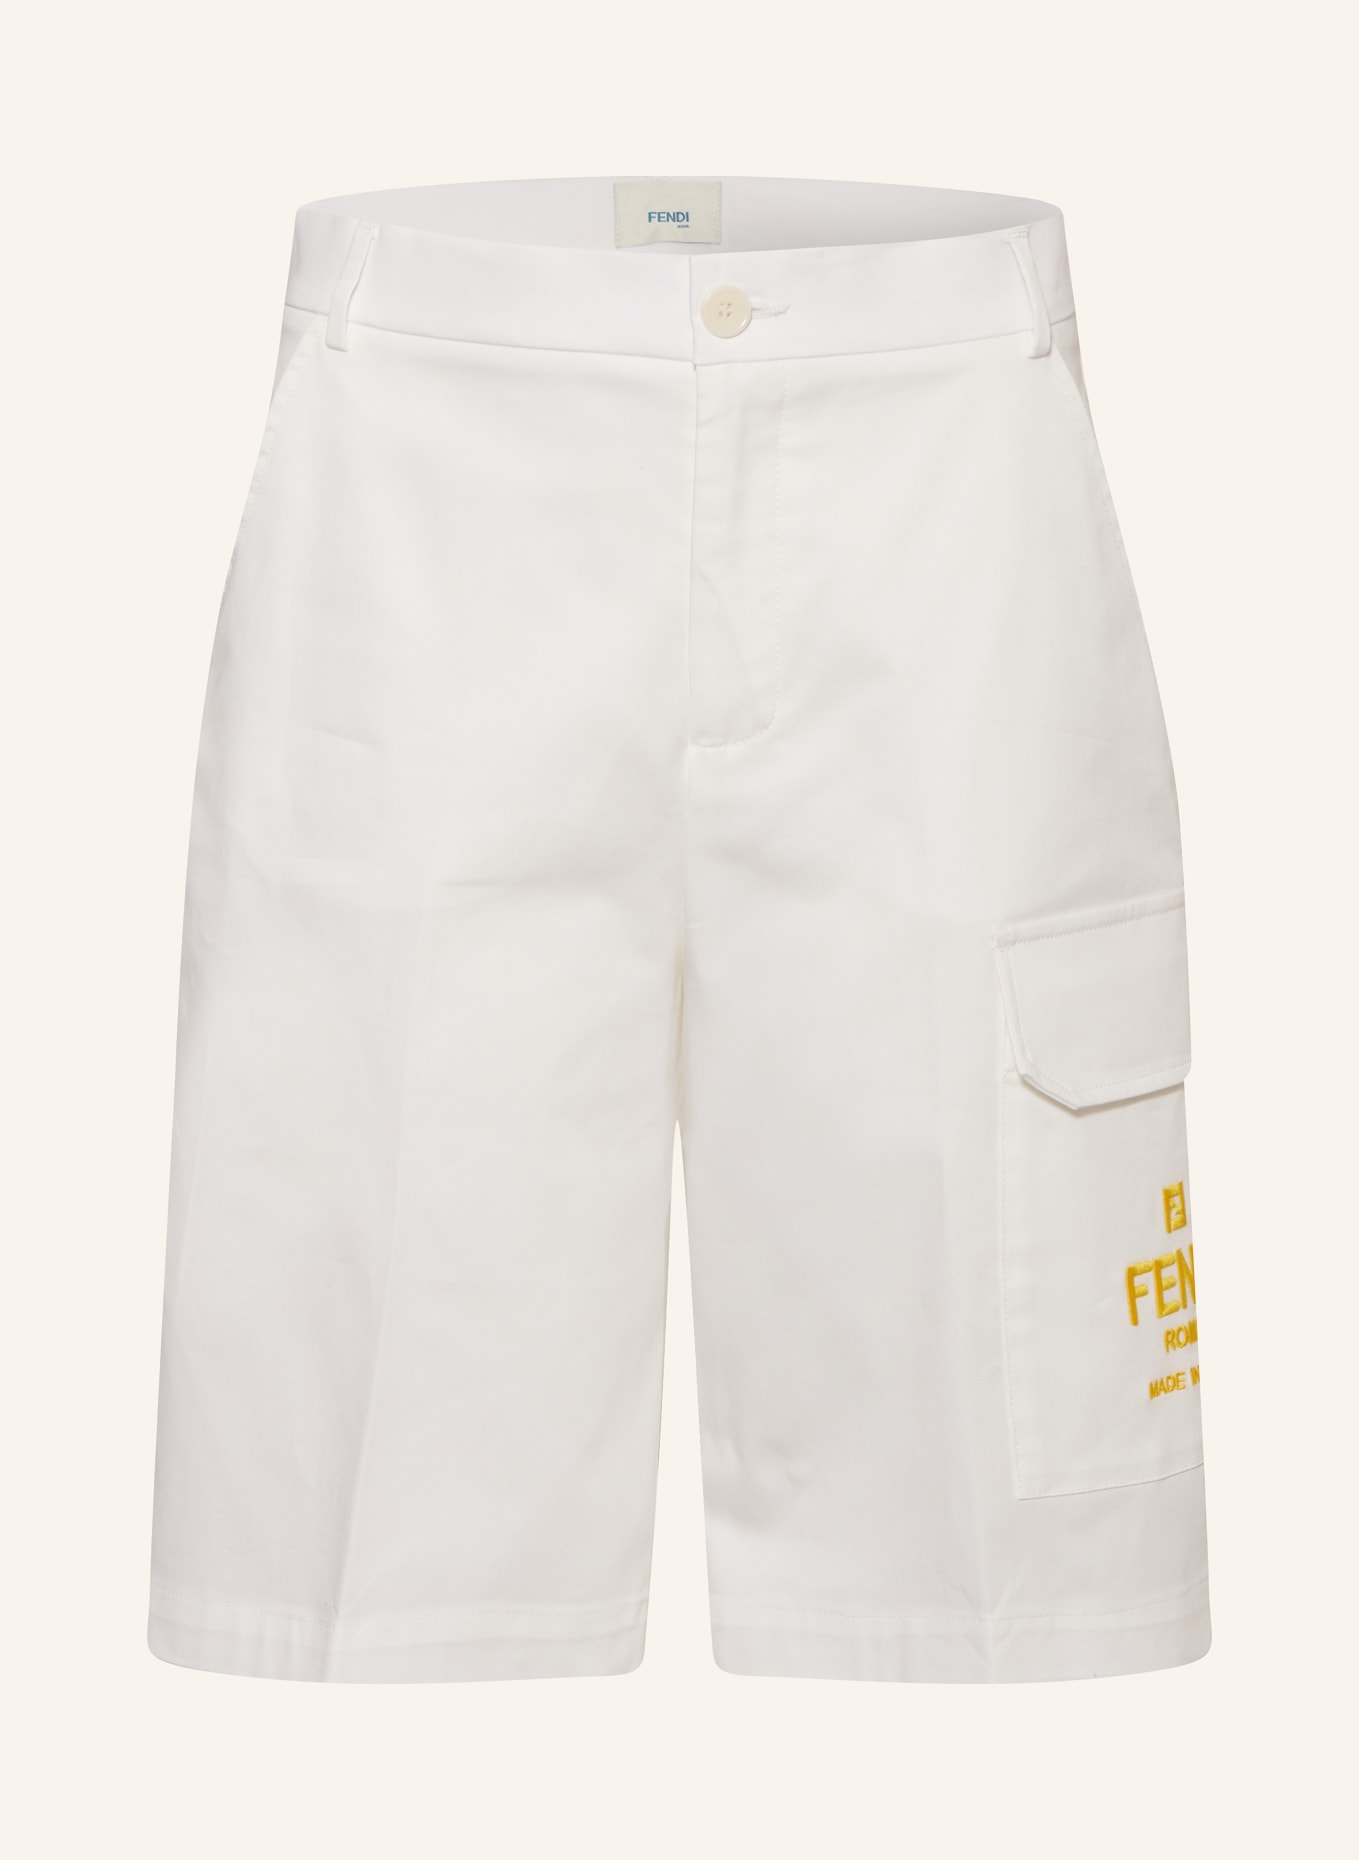 FENDI Shorts, Farbe: WEISS (Bild 1)